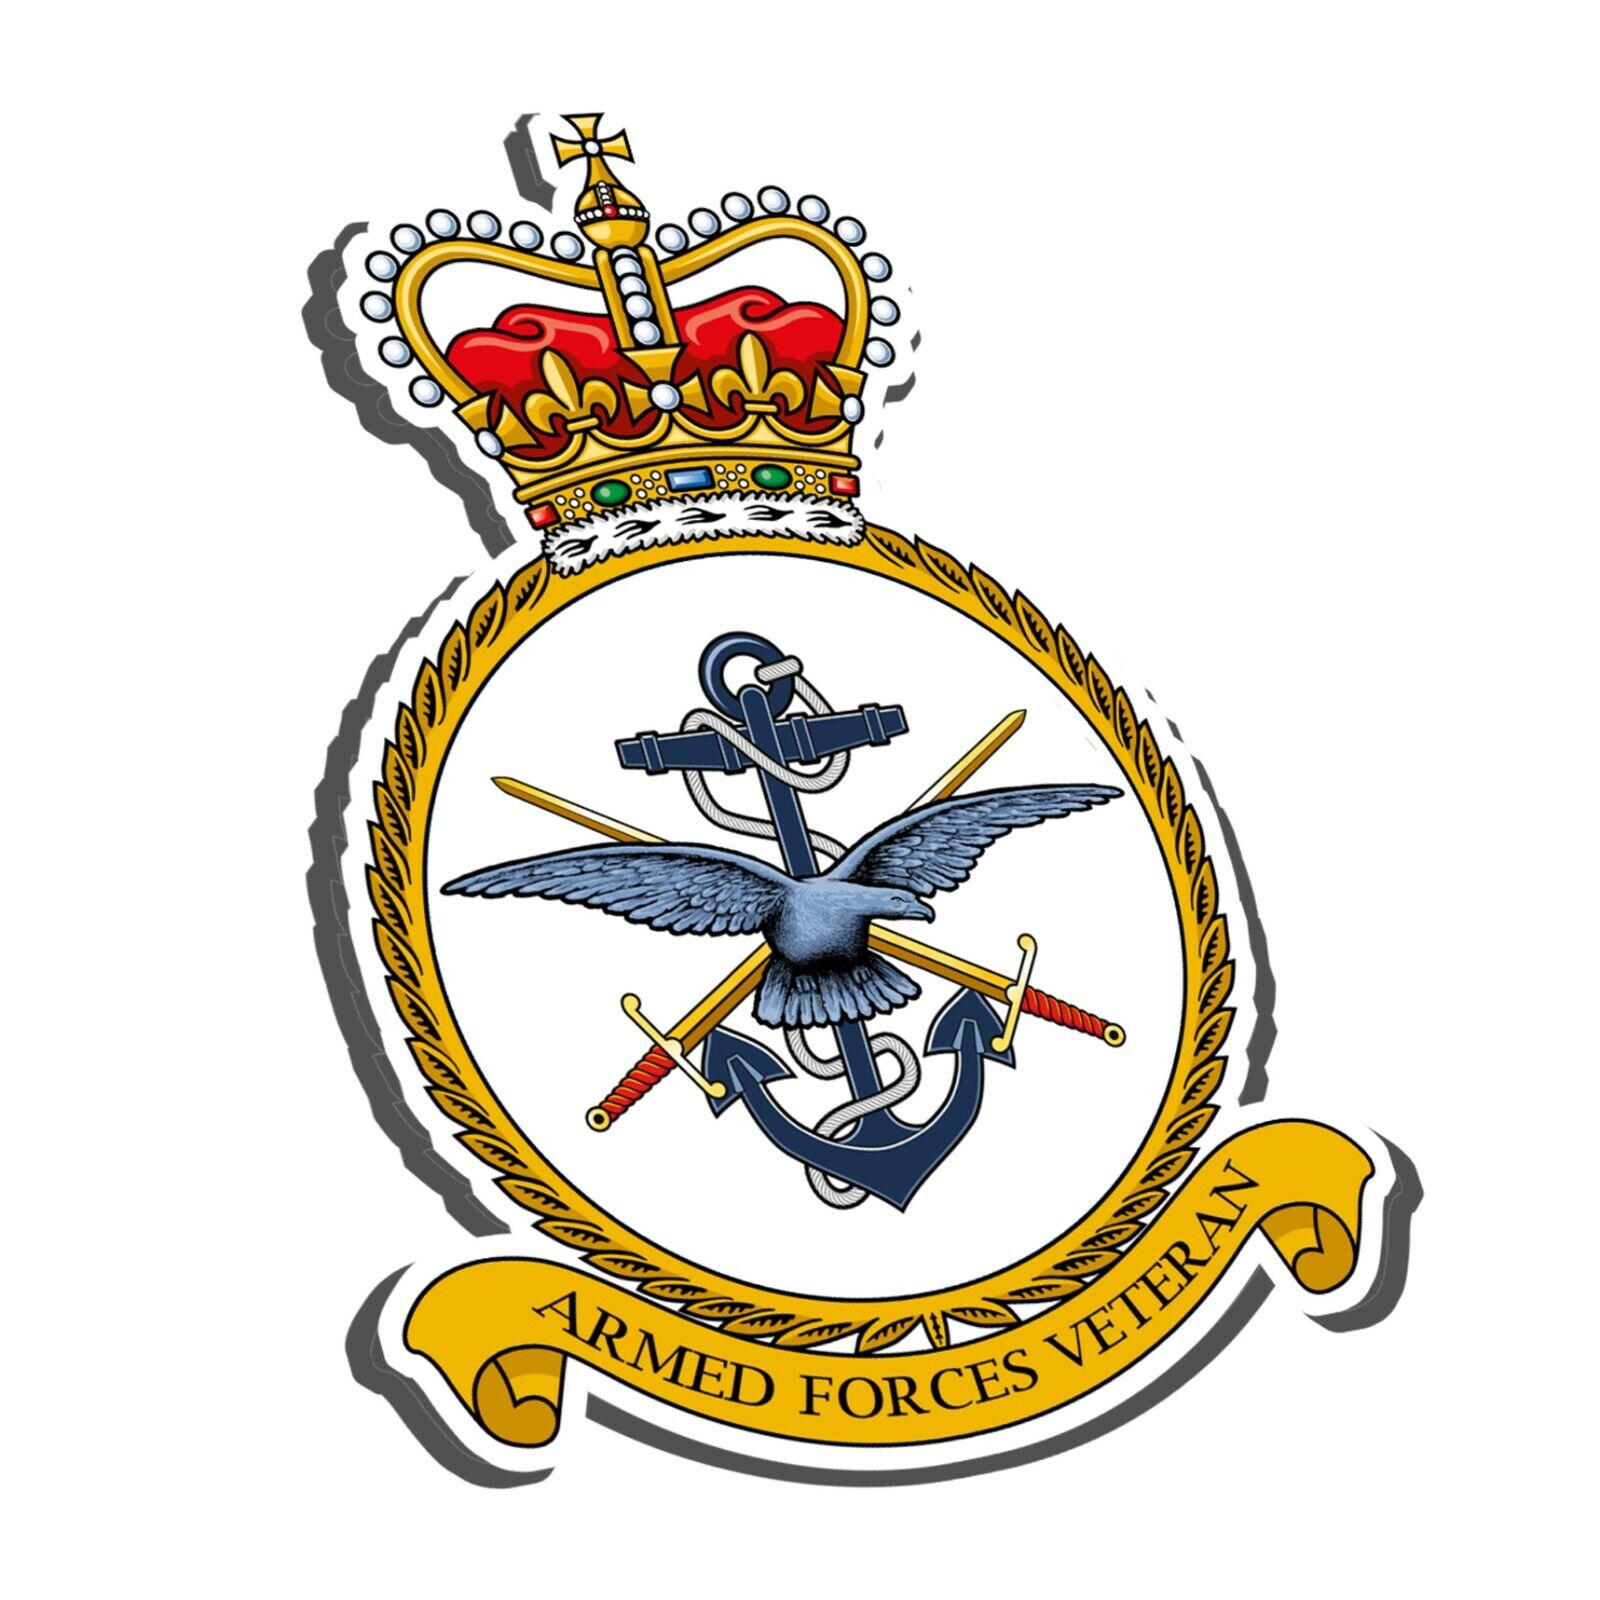 ARMED FORCES VETERAN STICKER - NAVY, ARMY, RAF - BRITISH LEGION UK BADGE